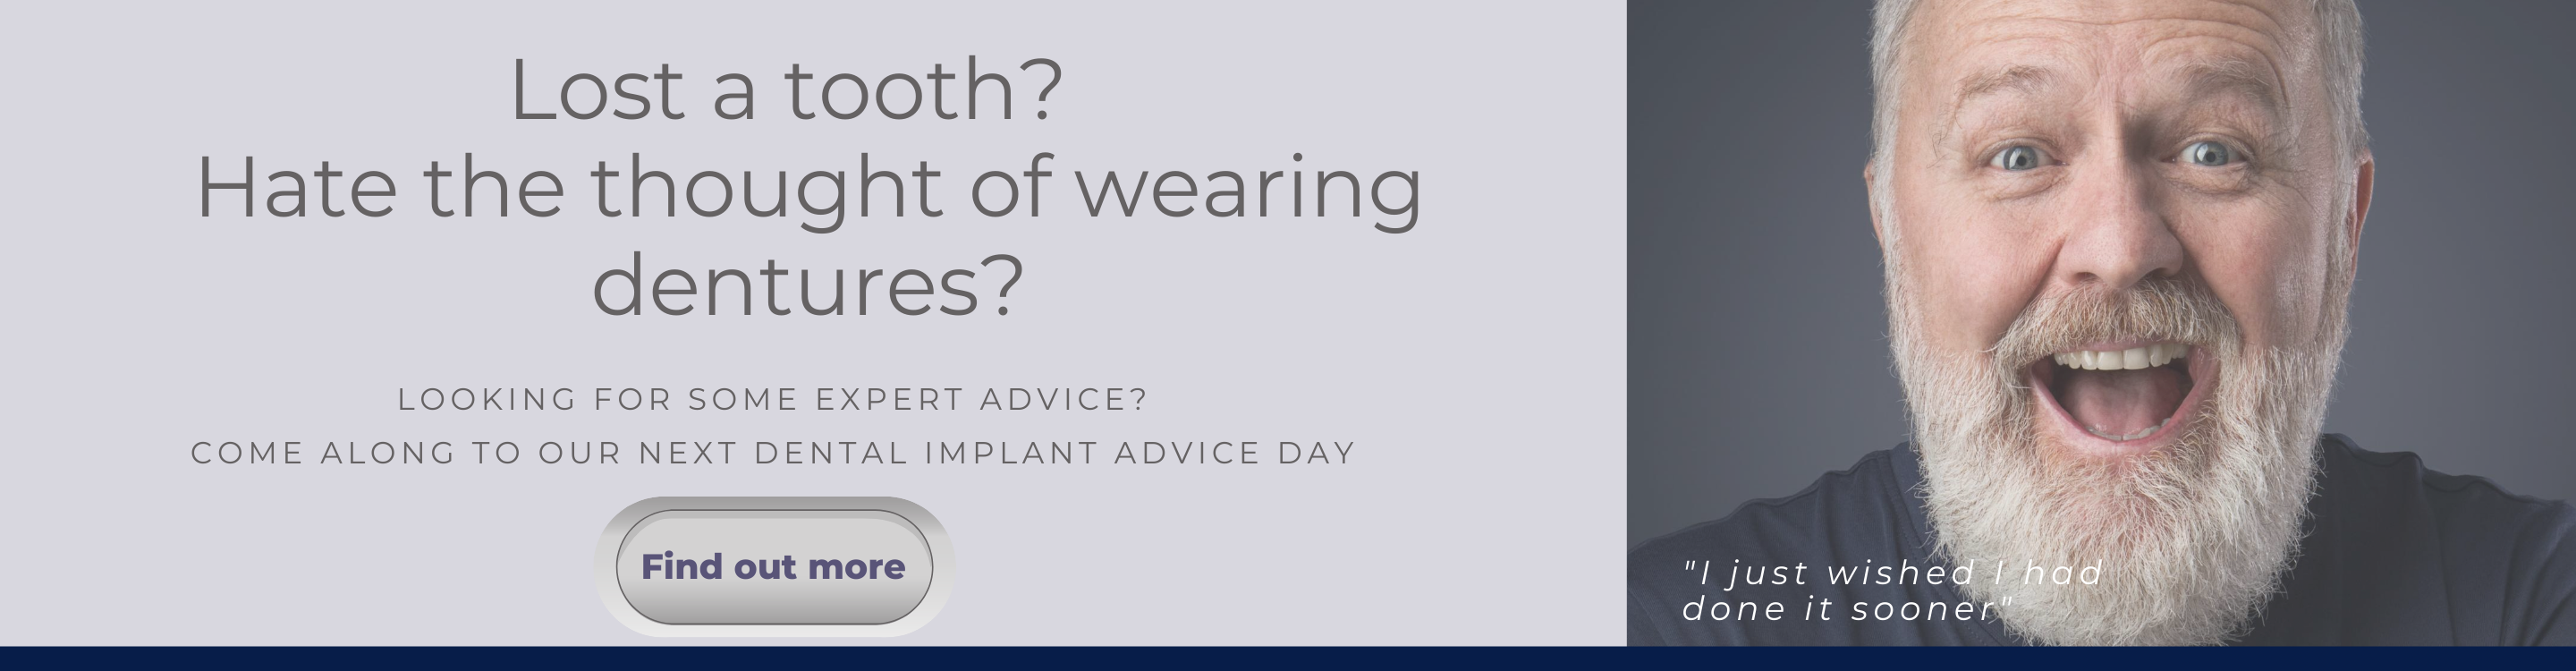 Dental Implant Advice Day - Gipsy Lane Orthodontics Reading